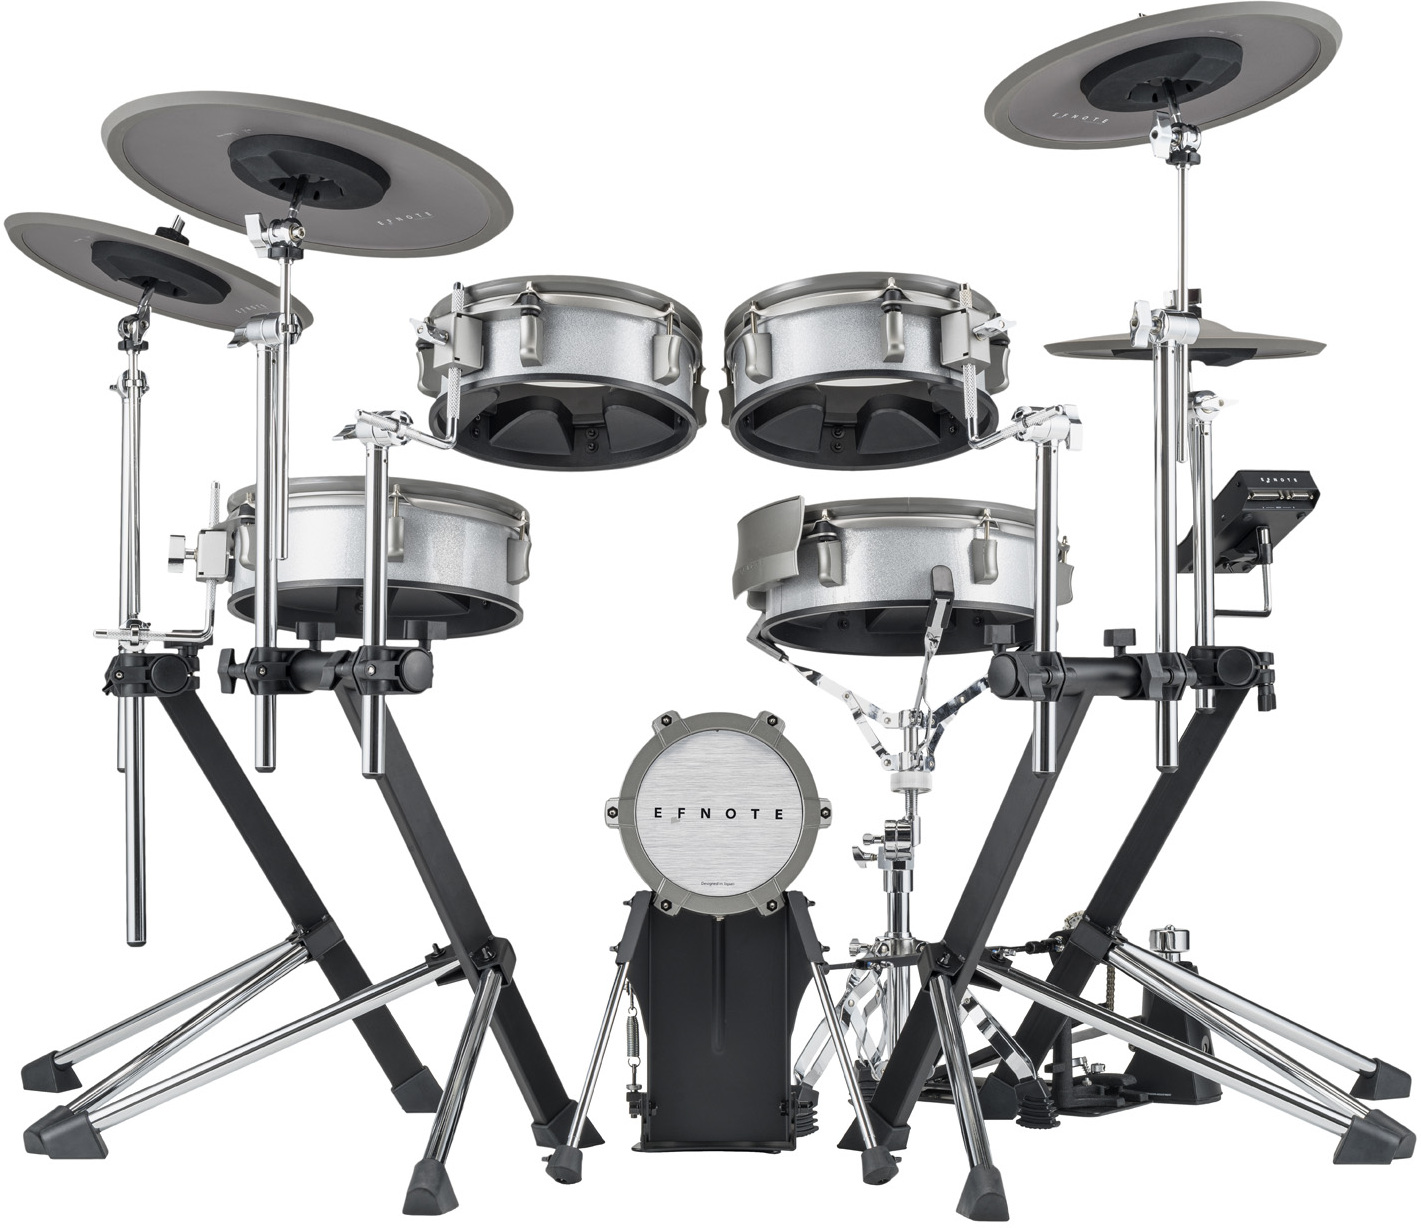 Efnote Efd3 Drum Kit - Komplett E-Drum Set - Main picture